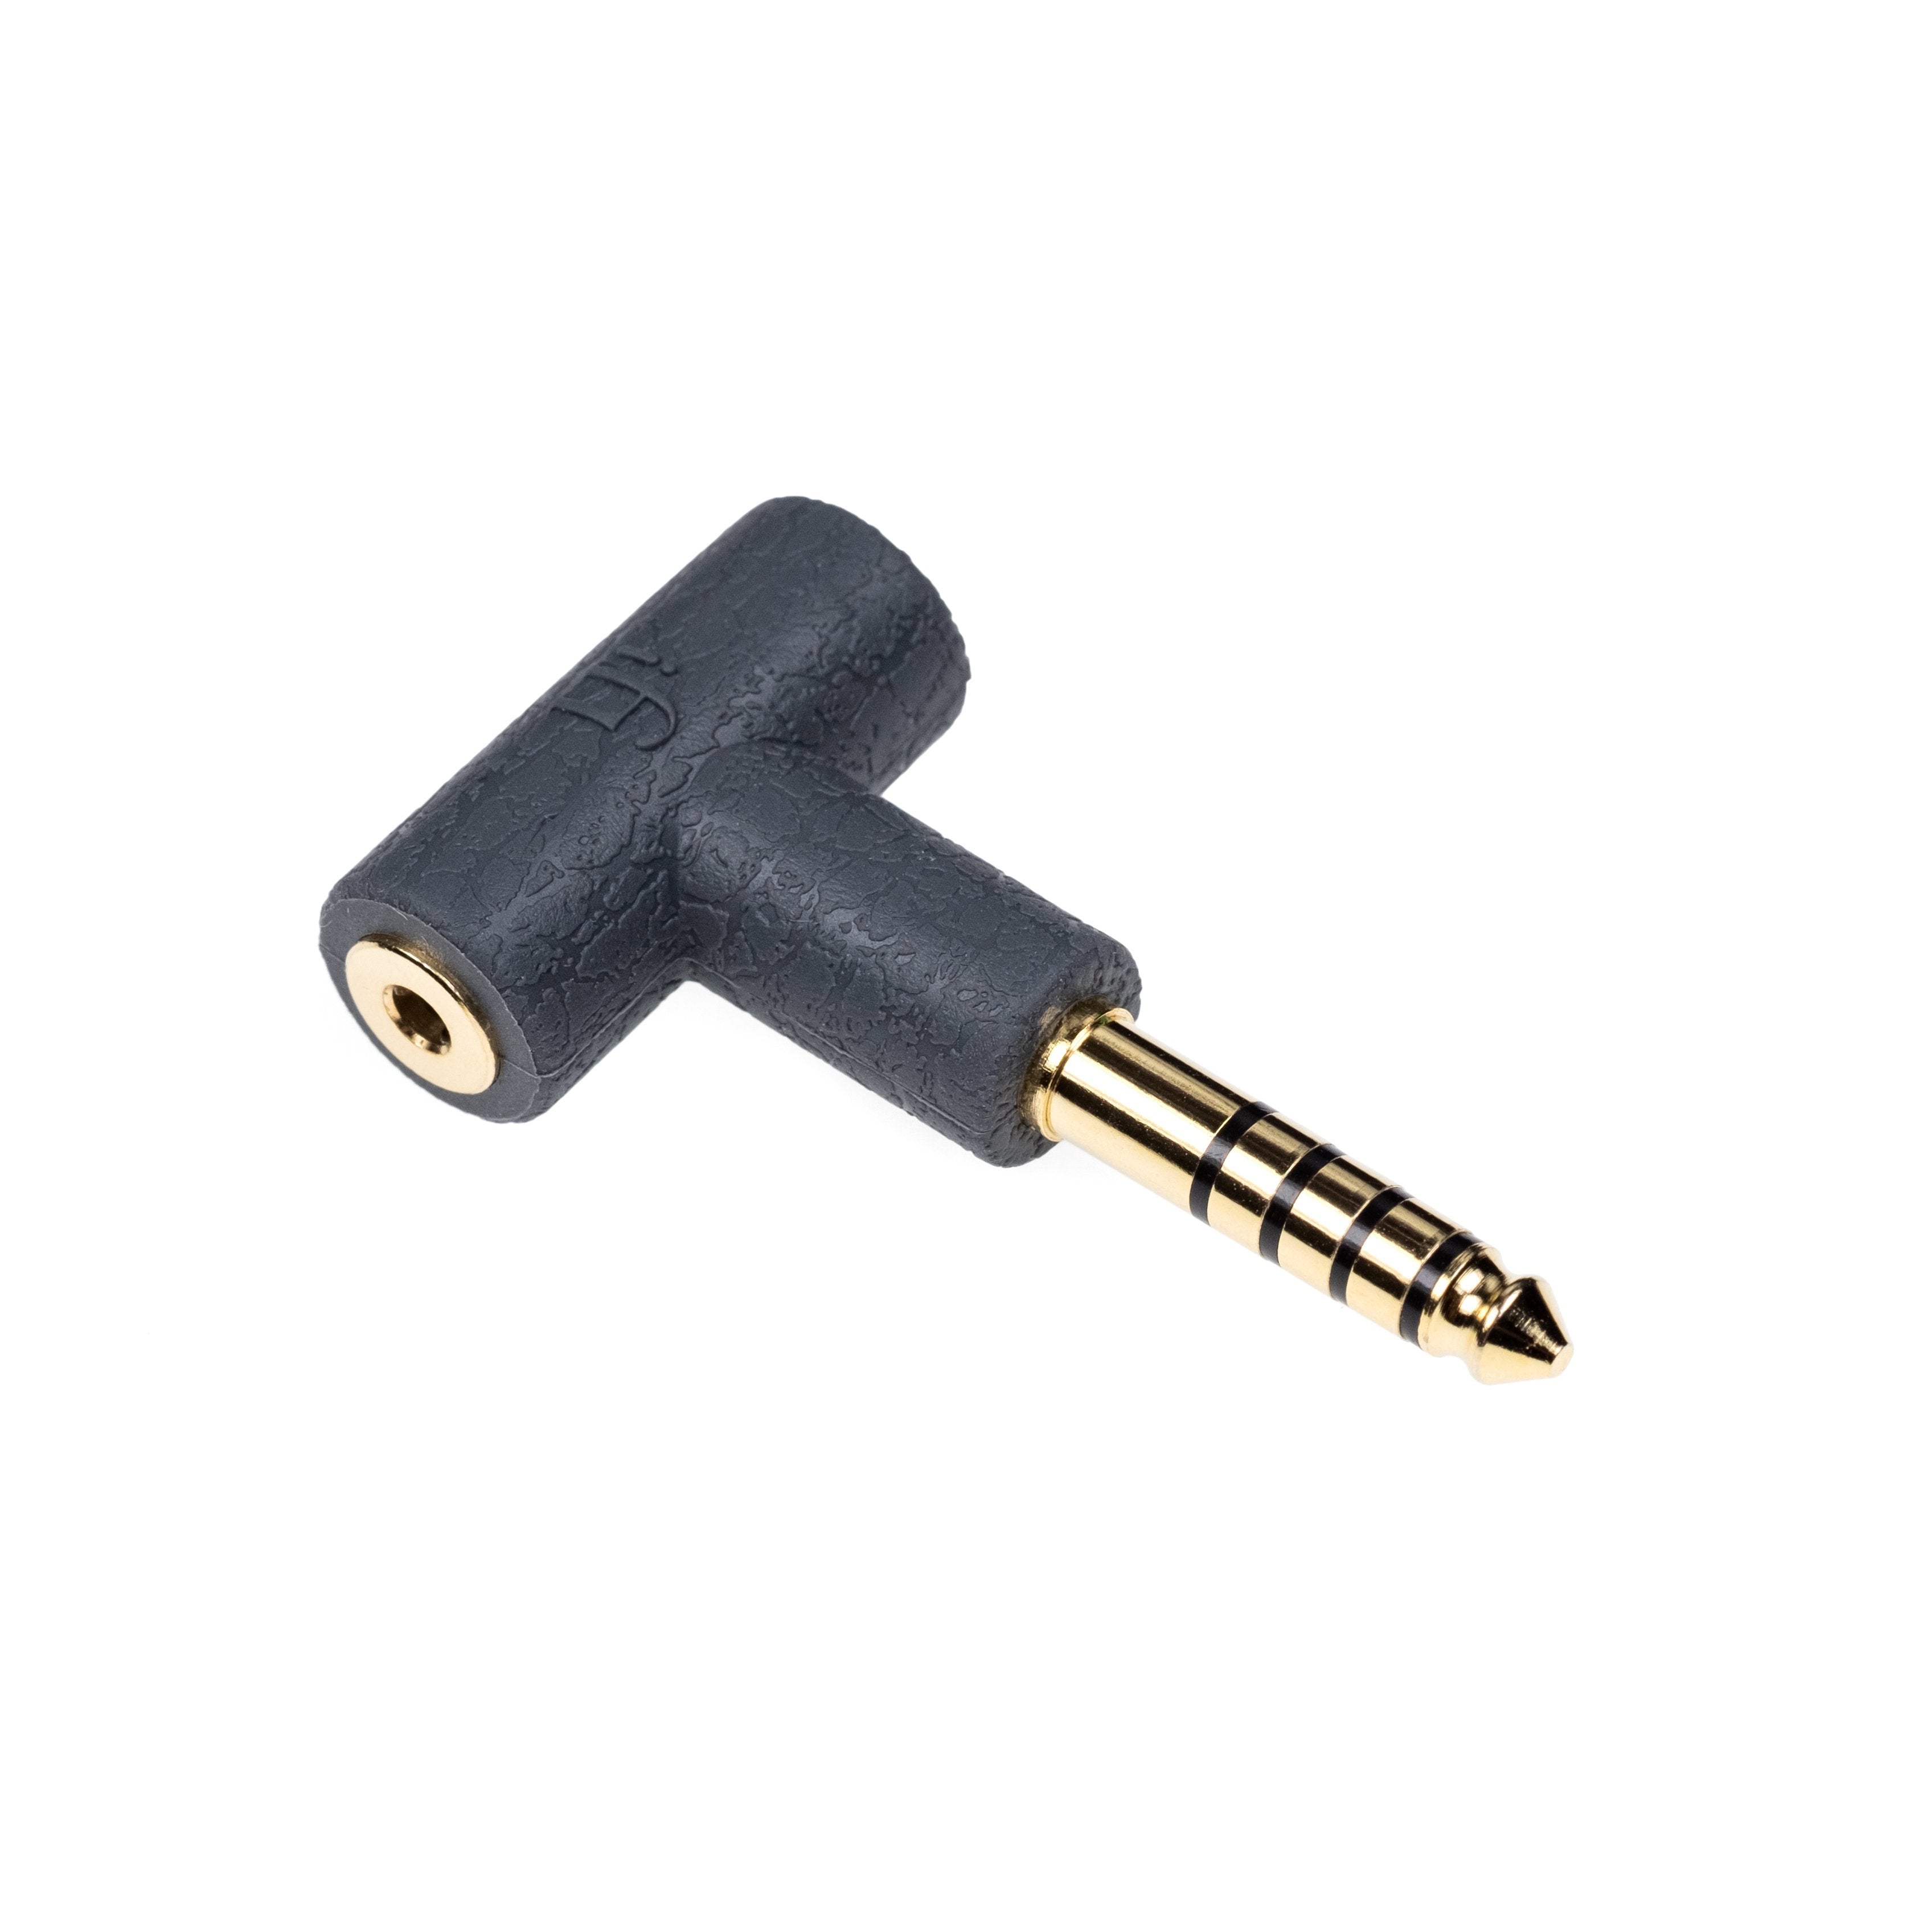 iFi Headphone Adapter | 2.5mm to 4.4mm Adapter